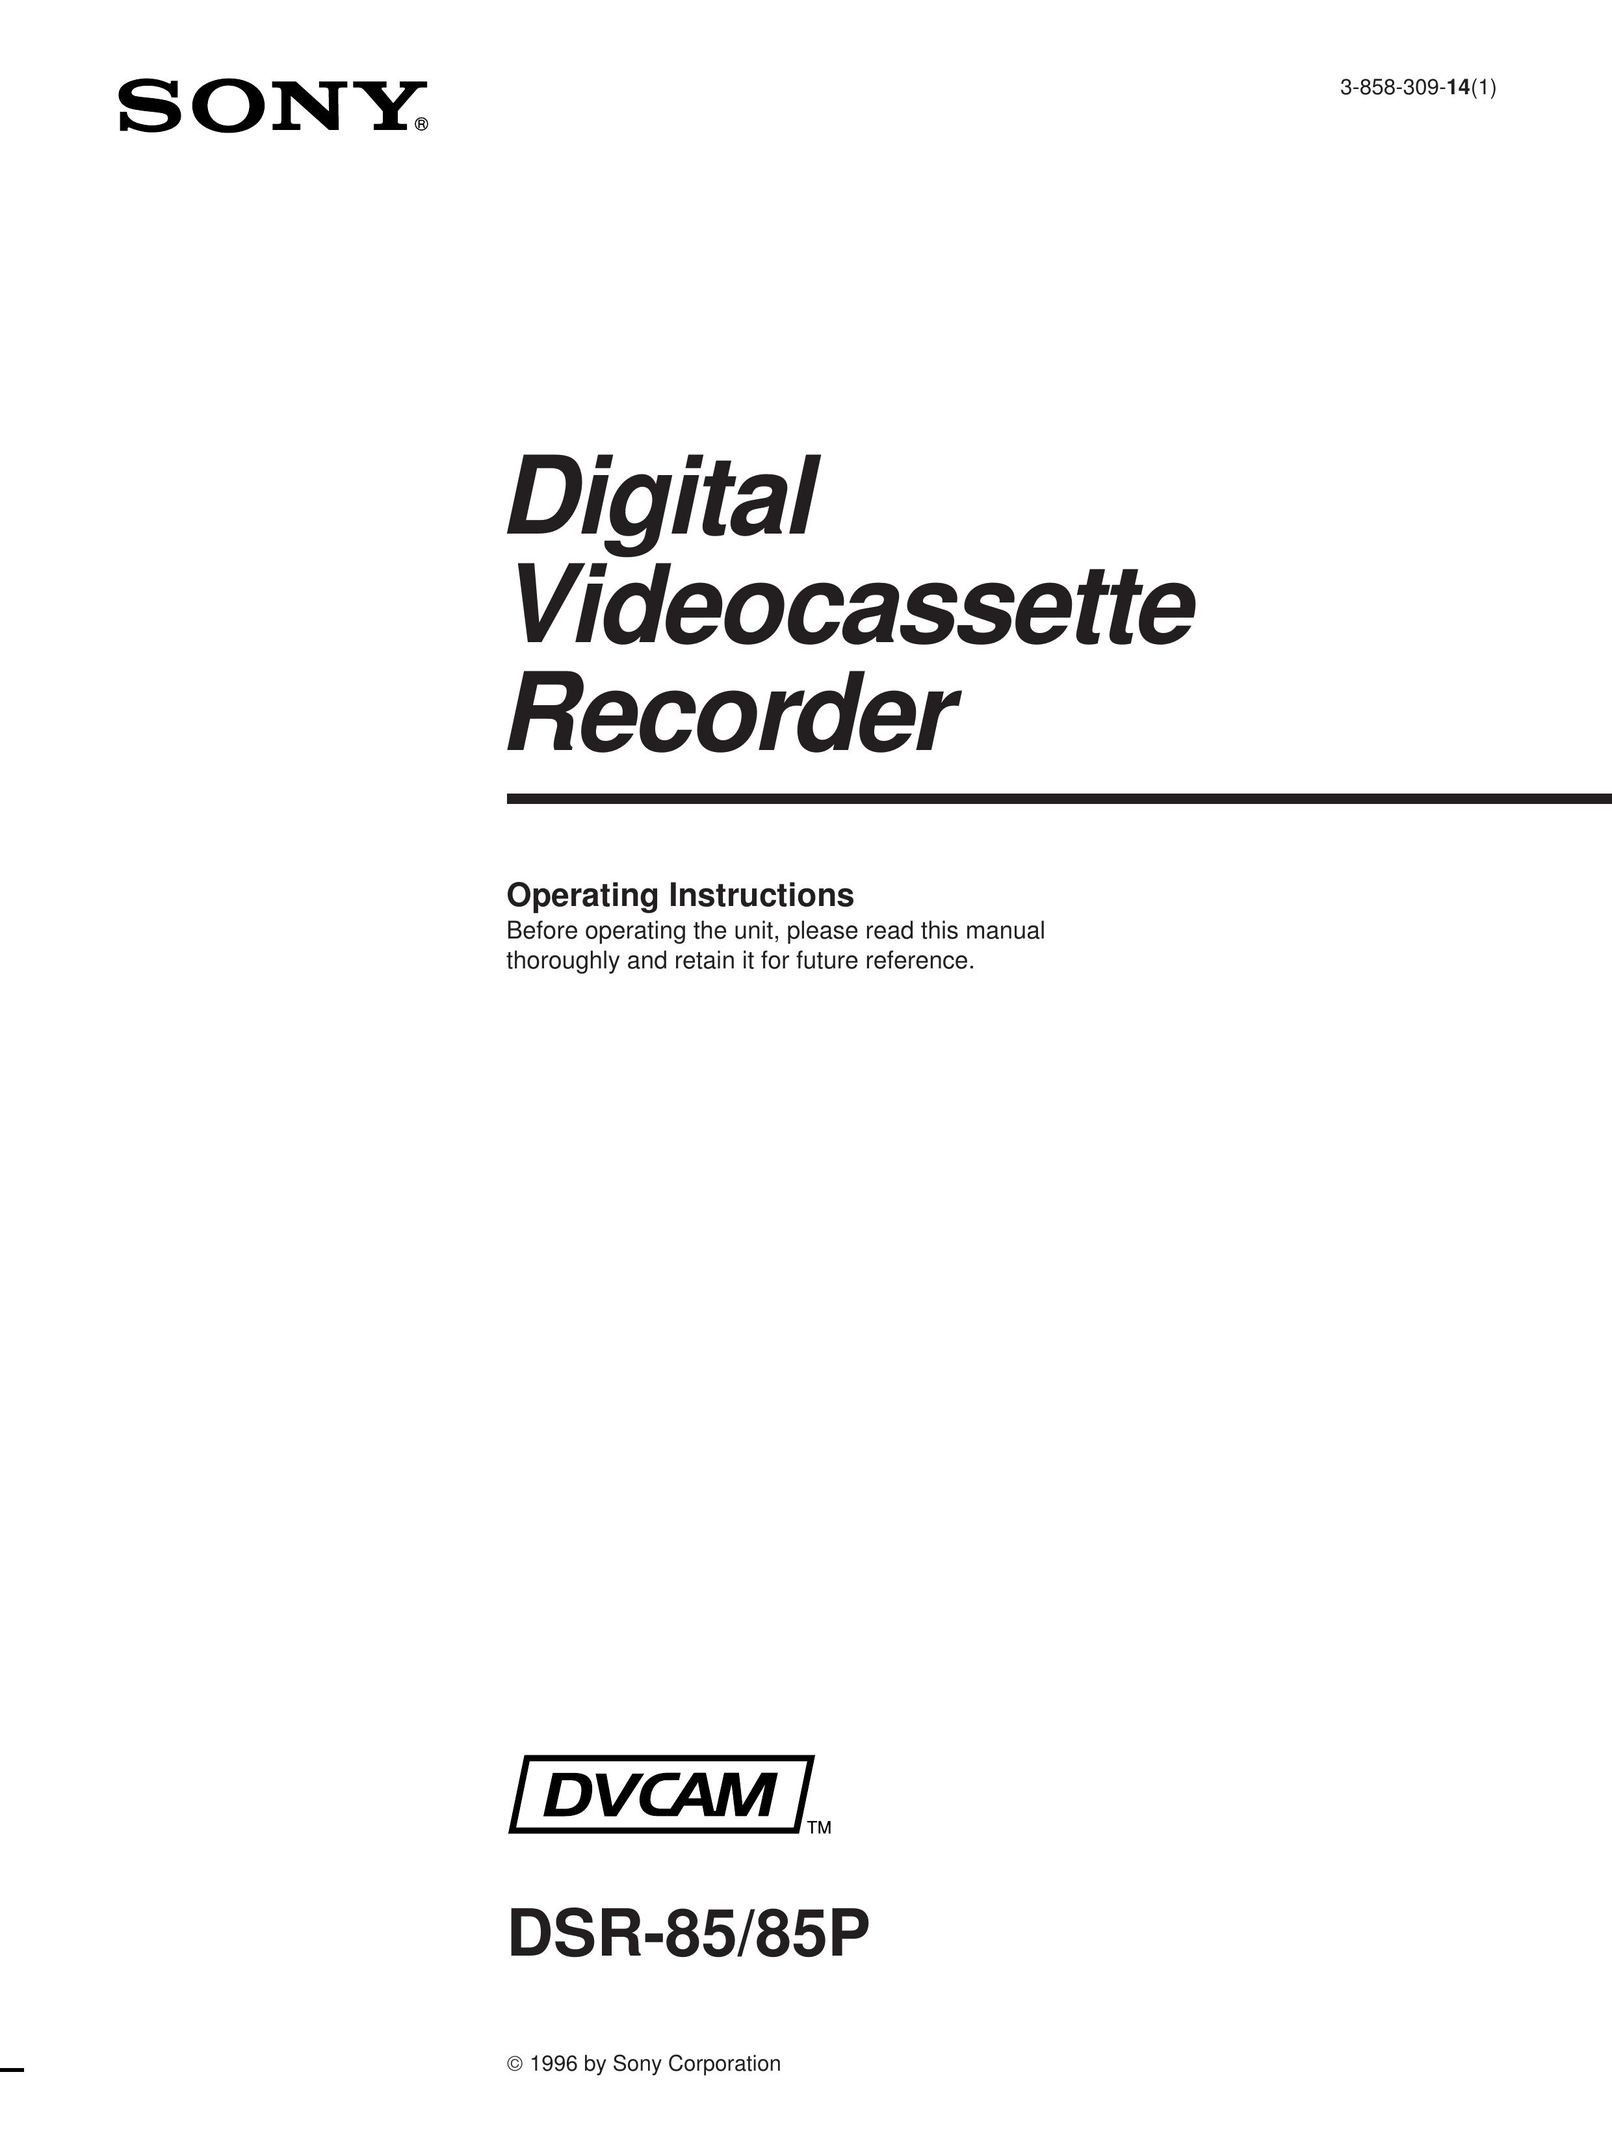 Sony DSR-85 VCR User Manual